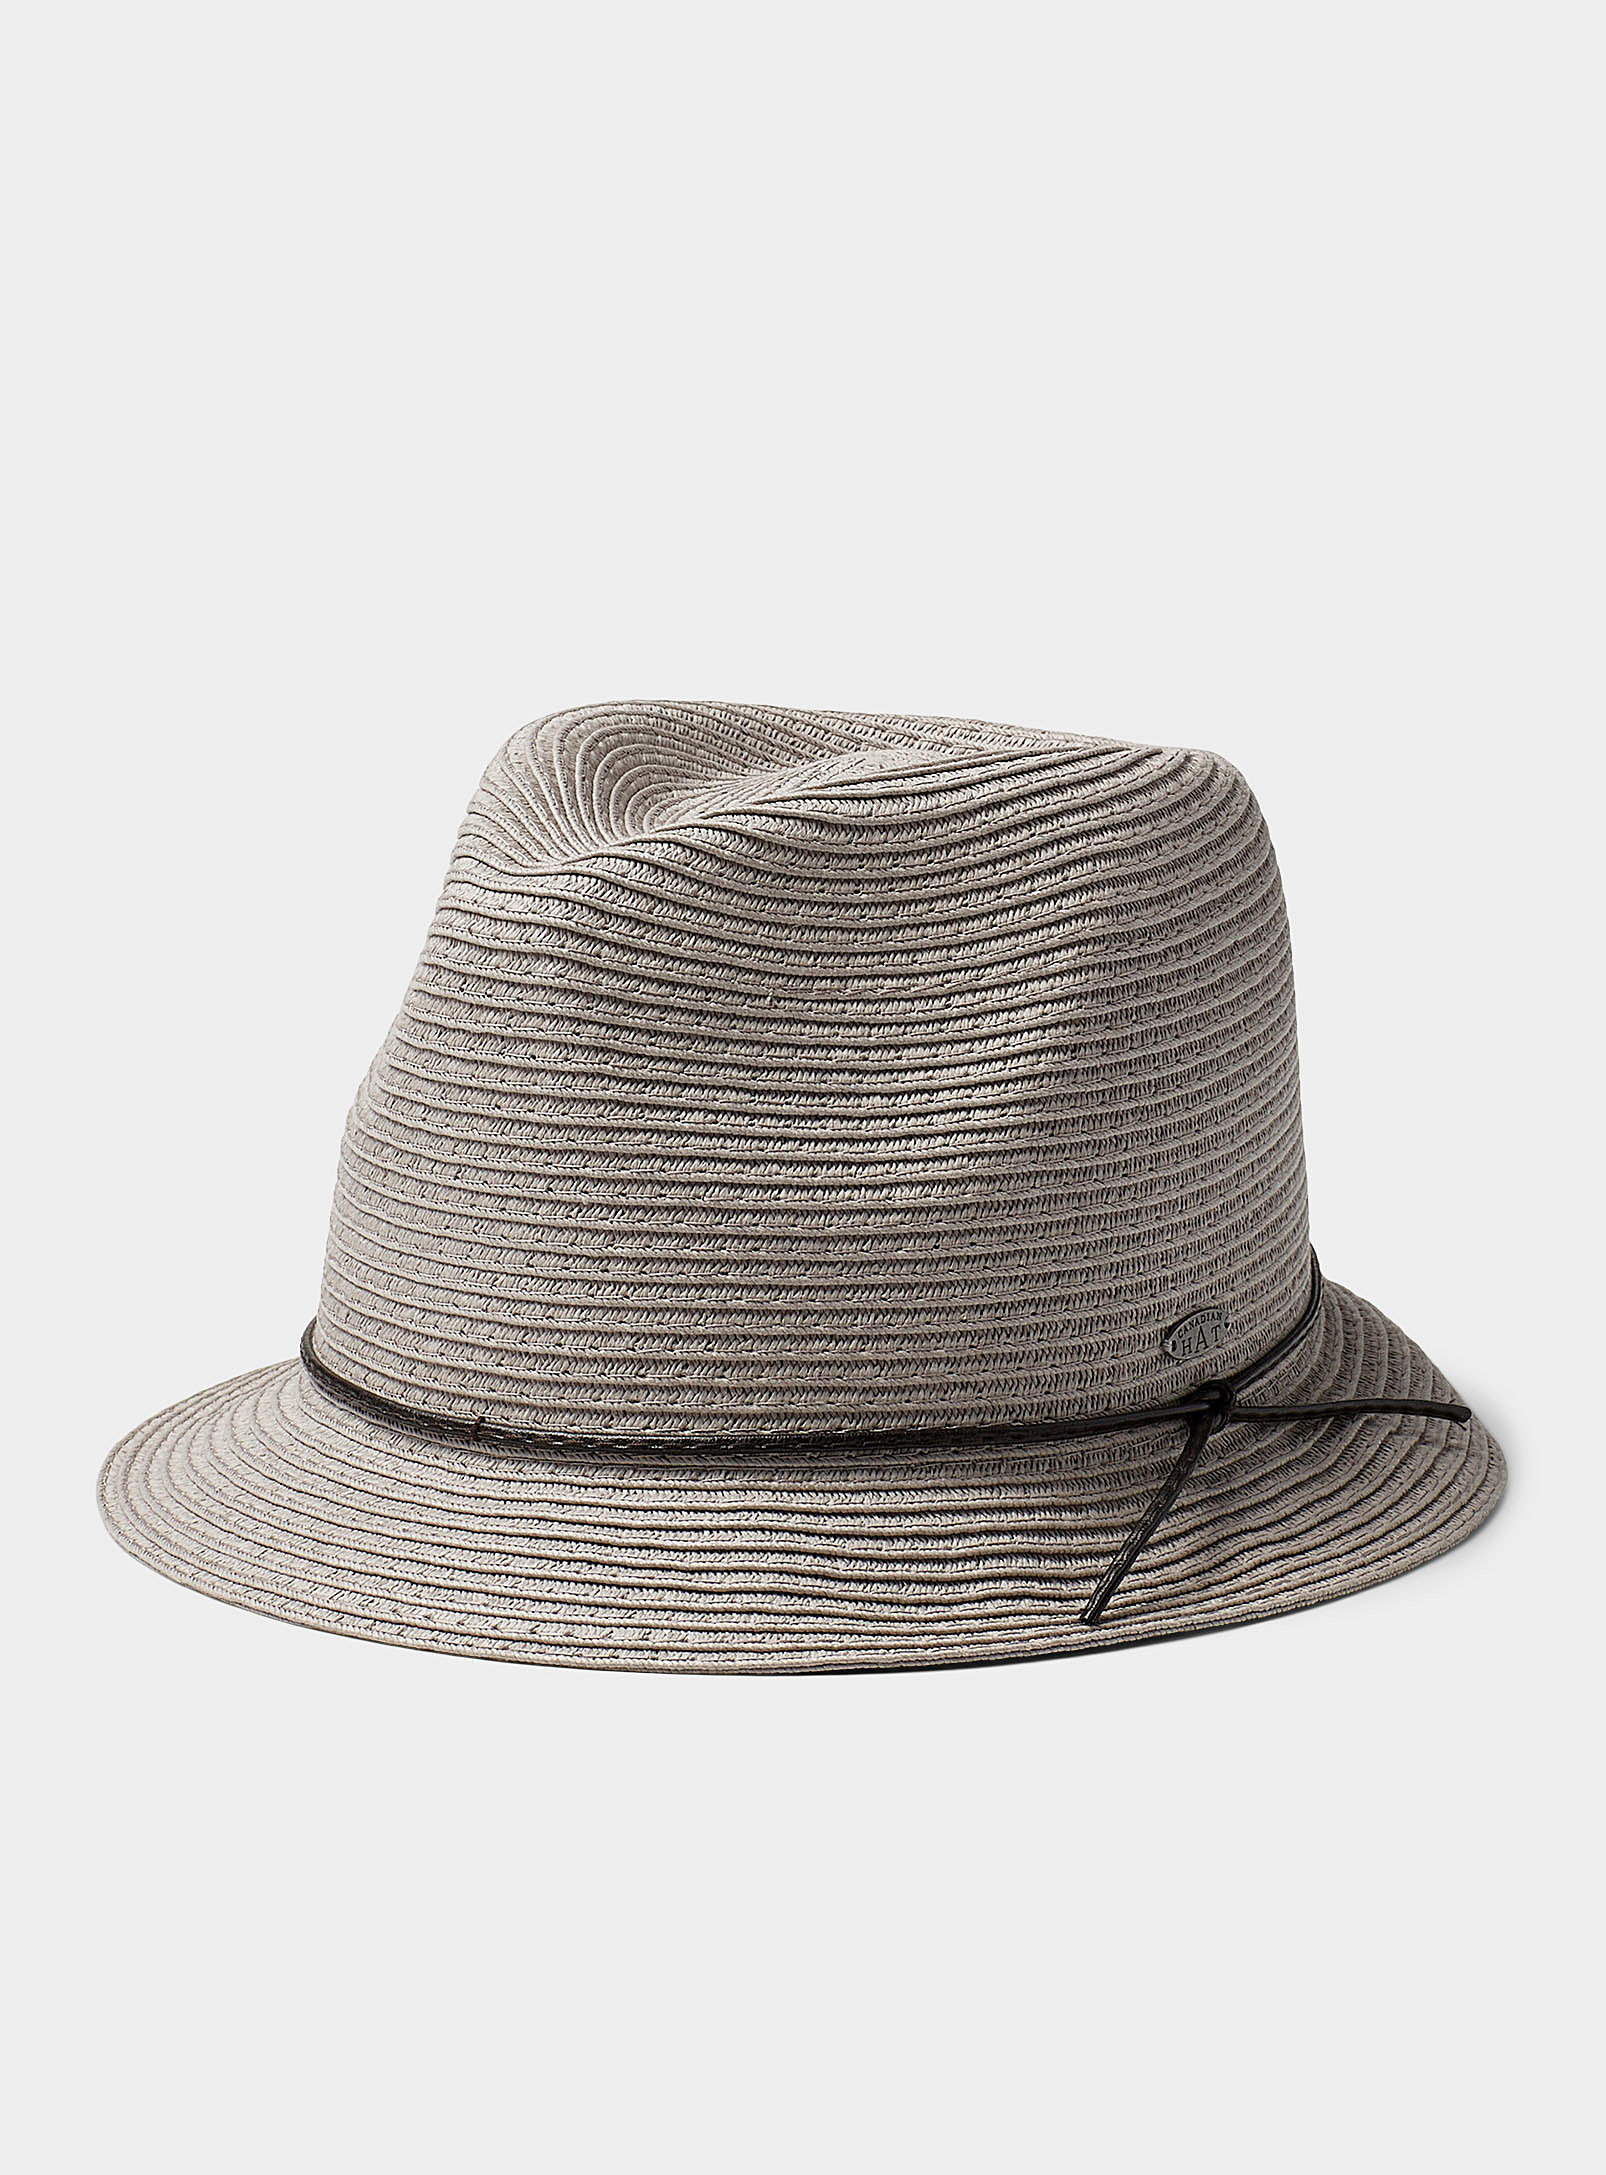 Canadian Hat Minimalist Straw Fedora In Silver